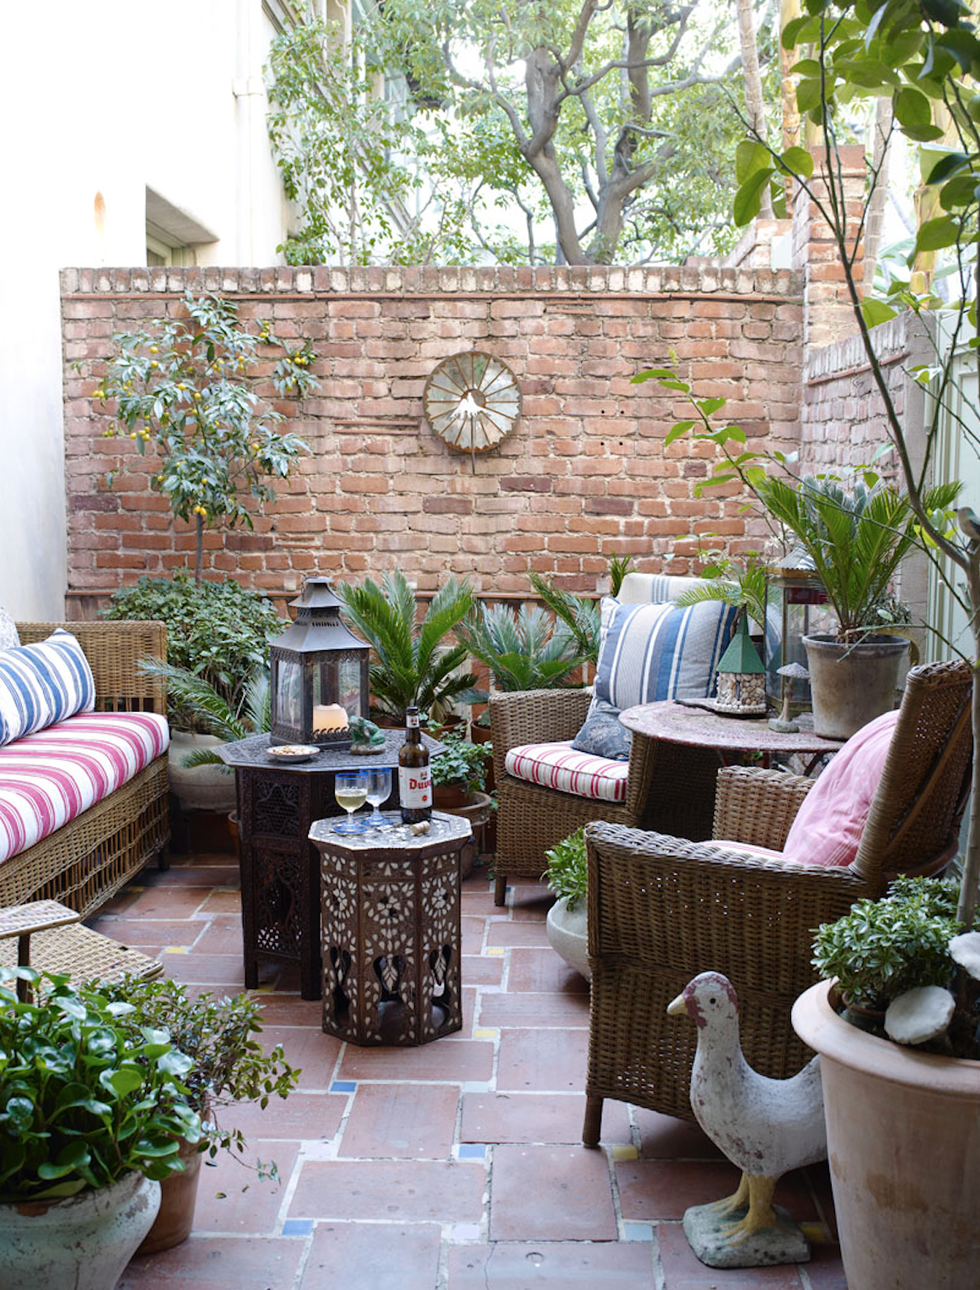 Create Outdoor Rooms in Your Backyard